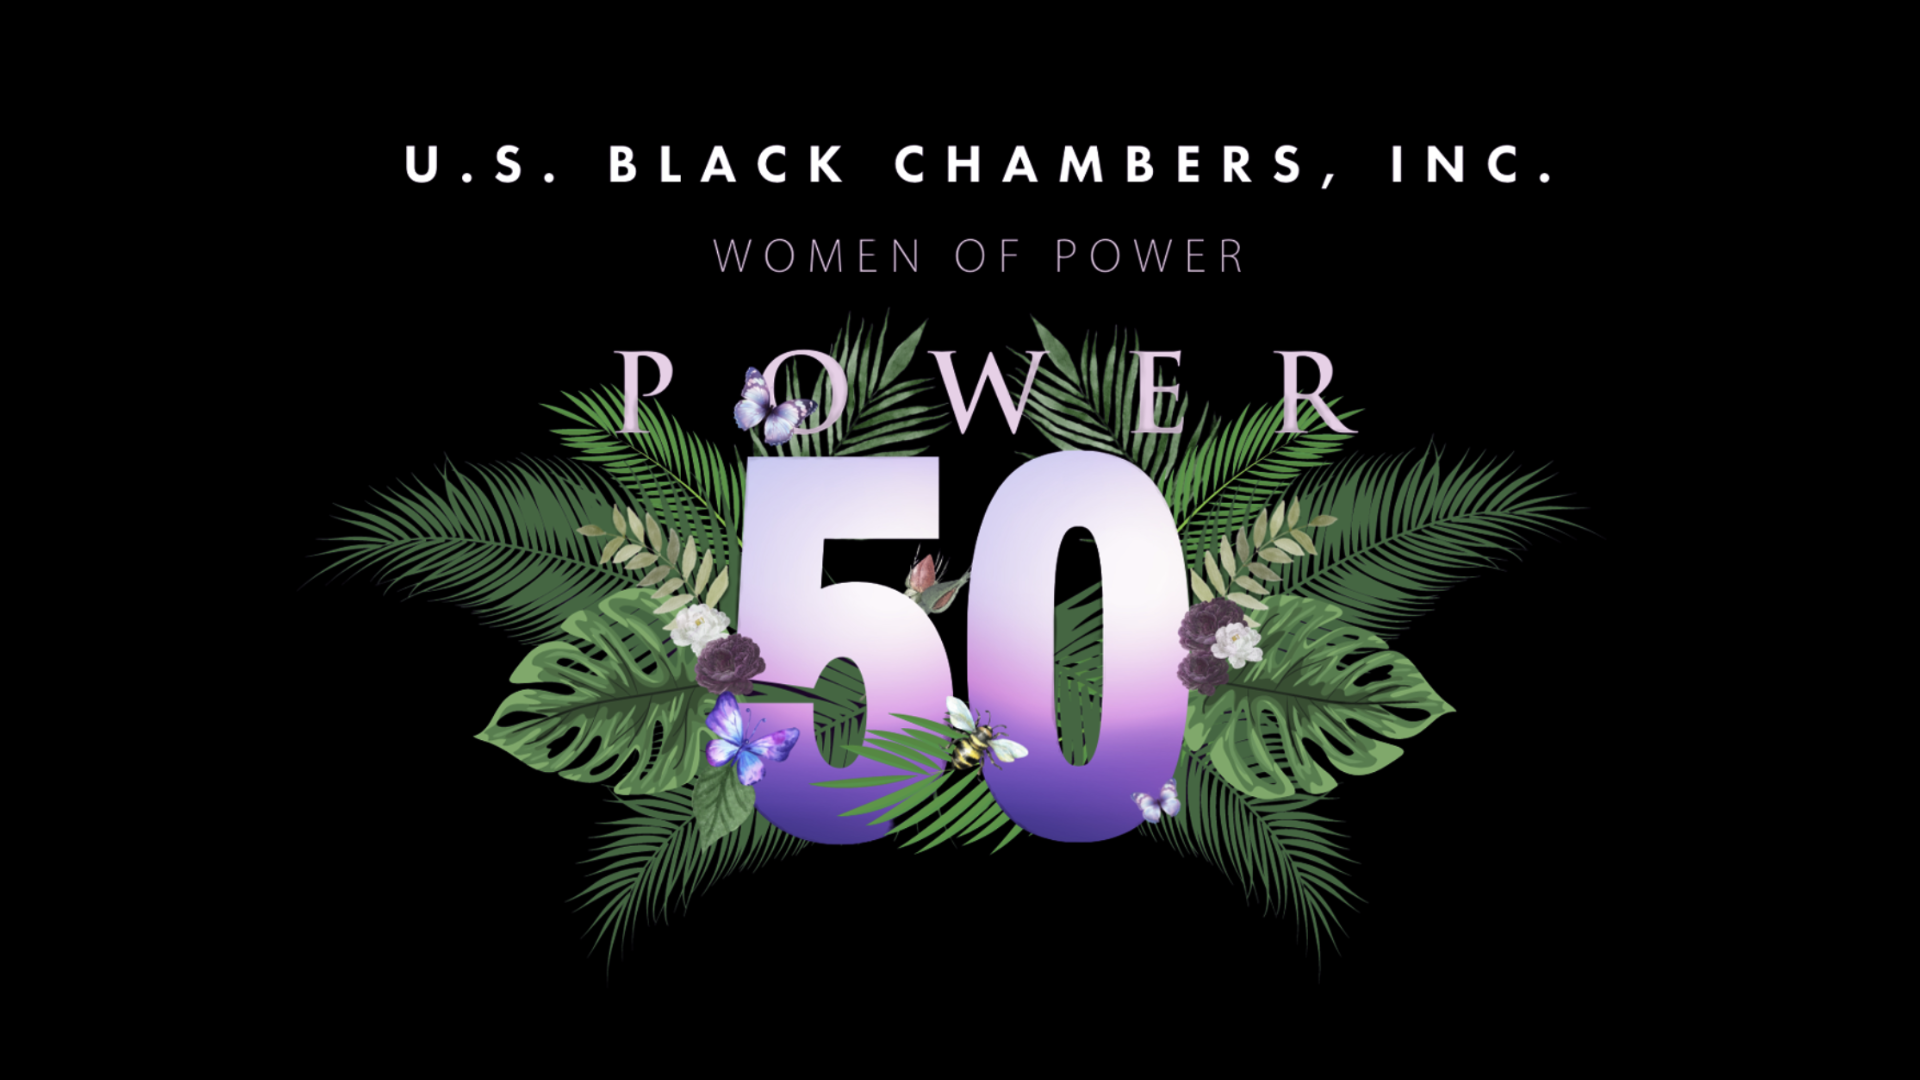 Keisha Lance Bottoms, Hon. Loretta Lynch, Michelle Jordan, Morgan DeBaun, Thasunda Duckett, Gwen Carr, and Tekedra Mawakana Named to U.S. Black Chamber’s 2023 Women of Power “Power 50” List